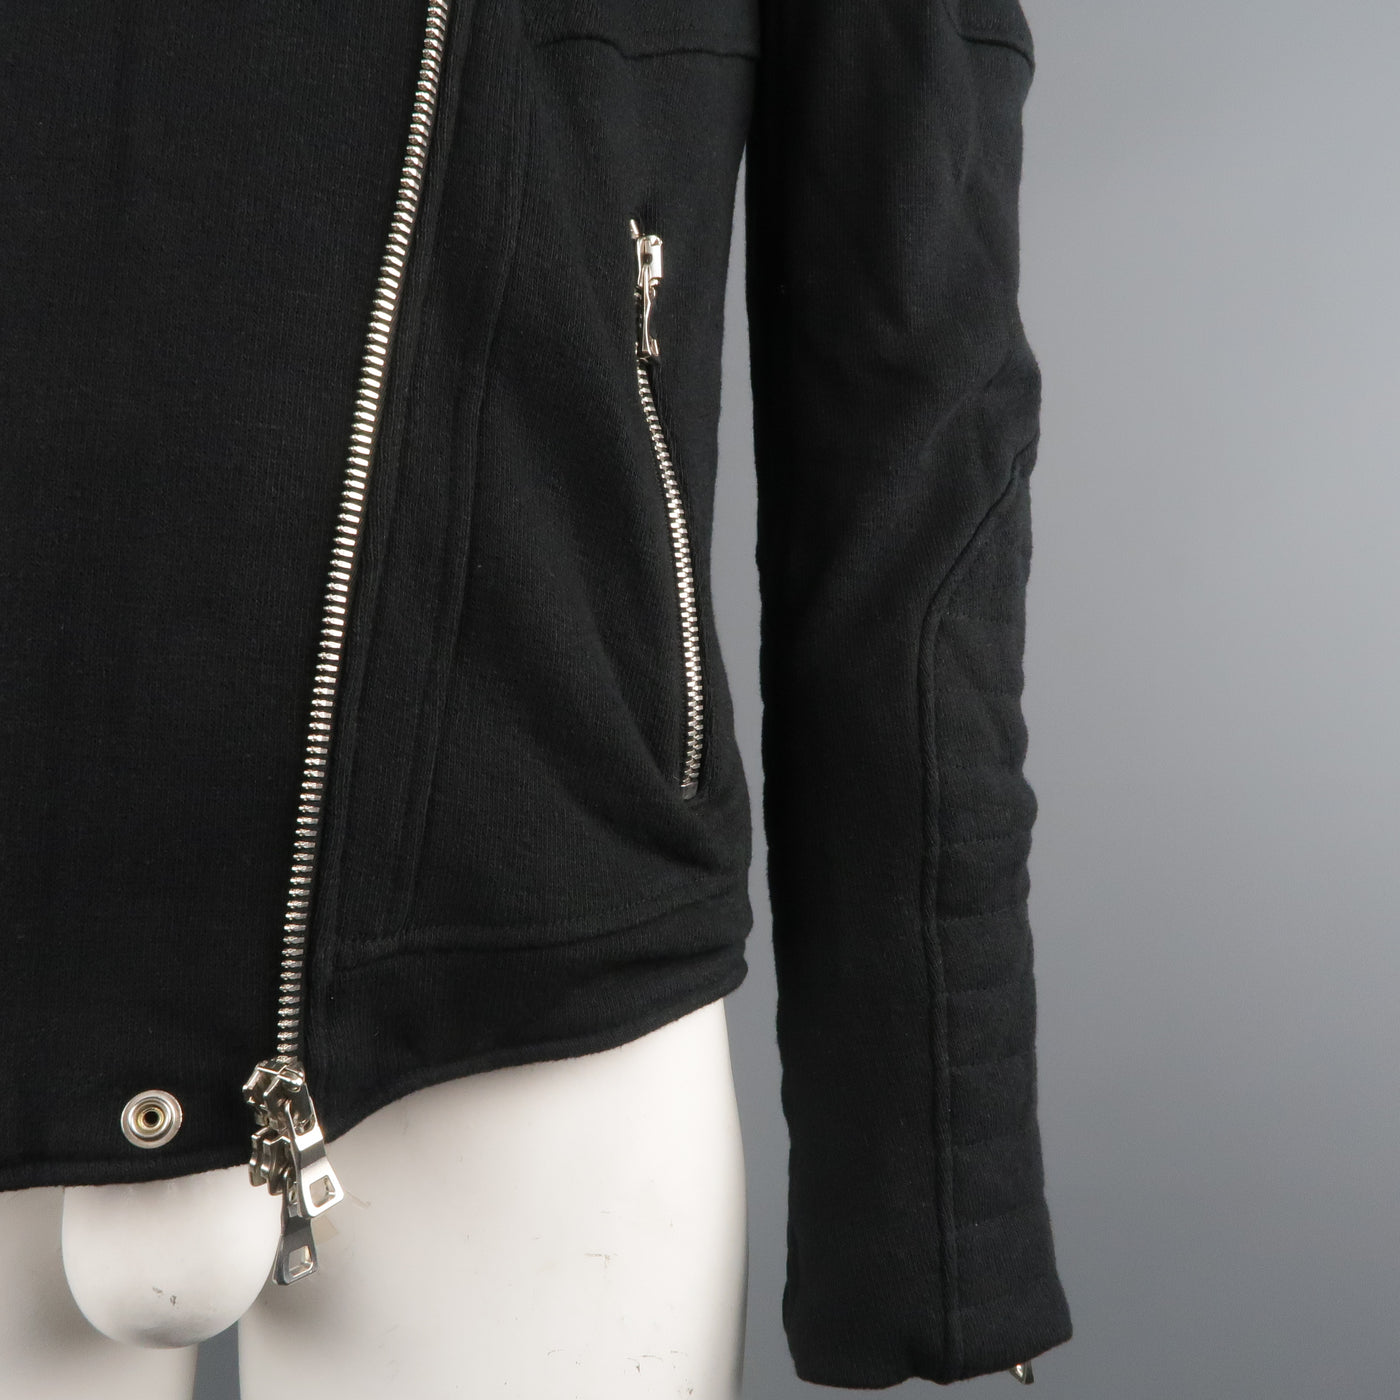 BALMAIN L Black Cotton / Linen Motorcycle Jacket